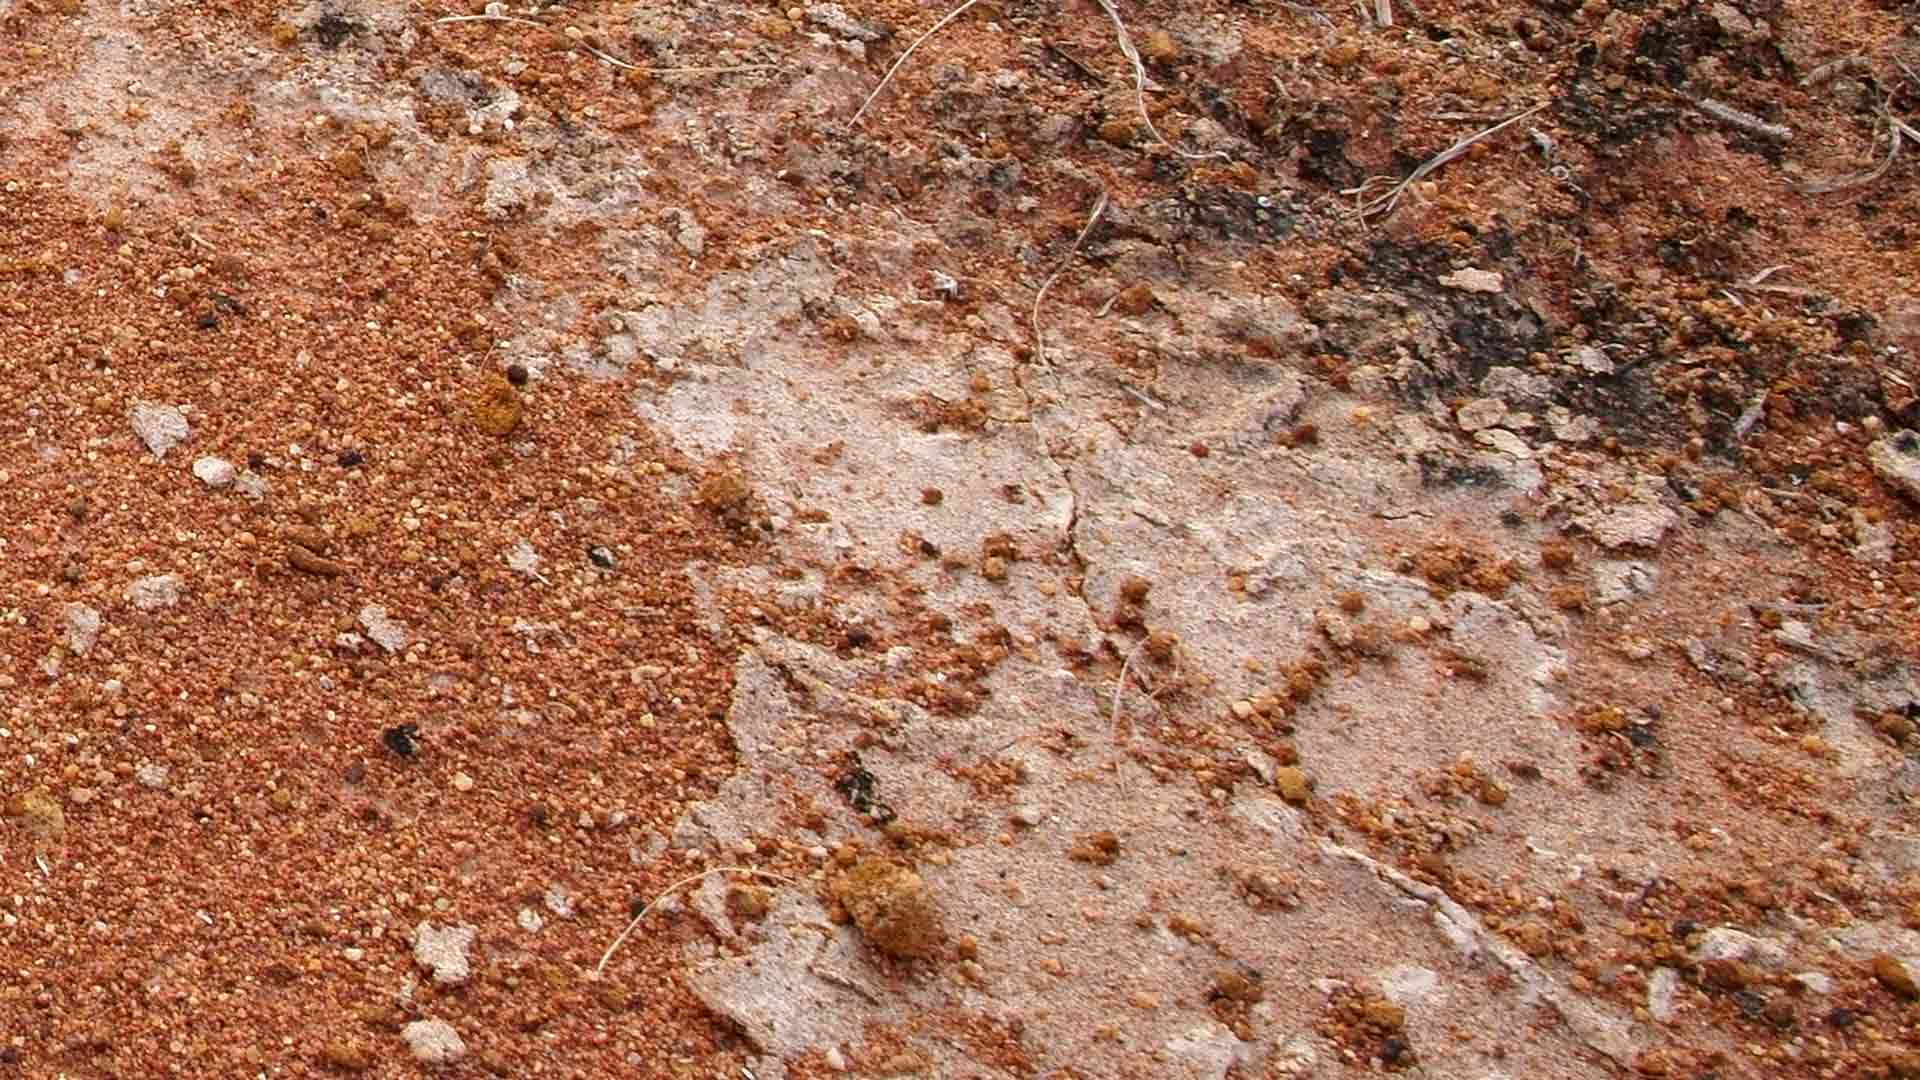 Acid Sulphate Soils